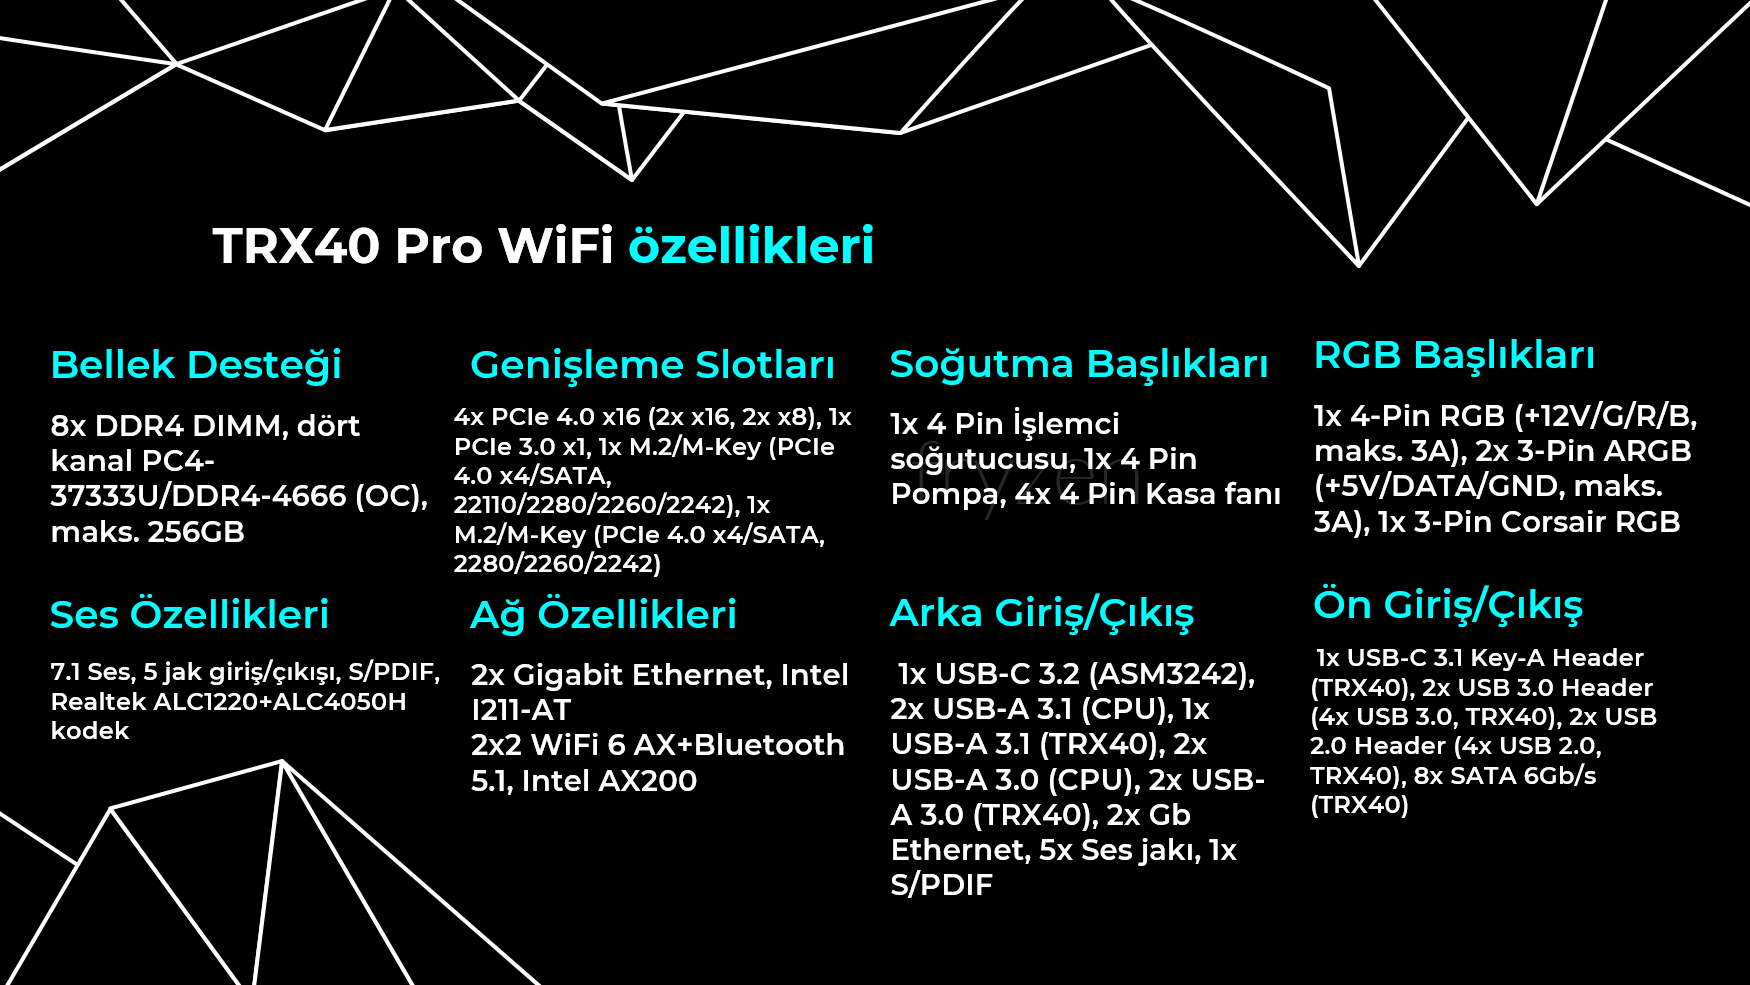 wifi3.png